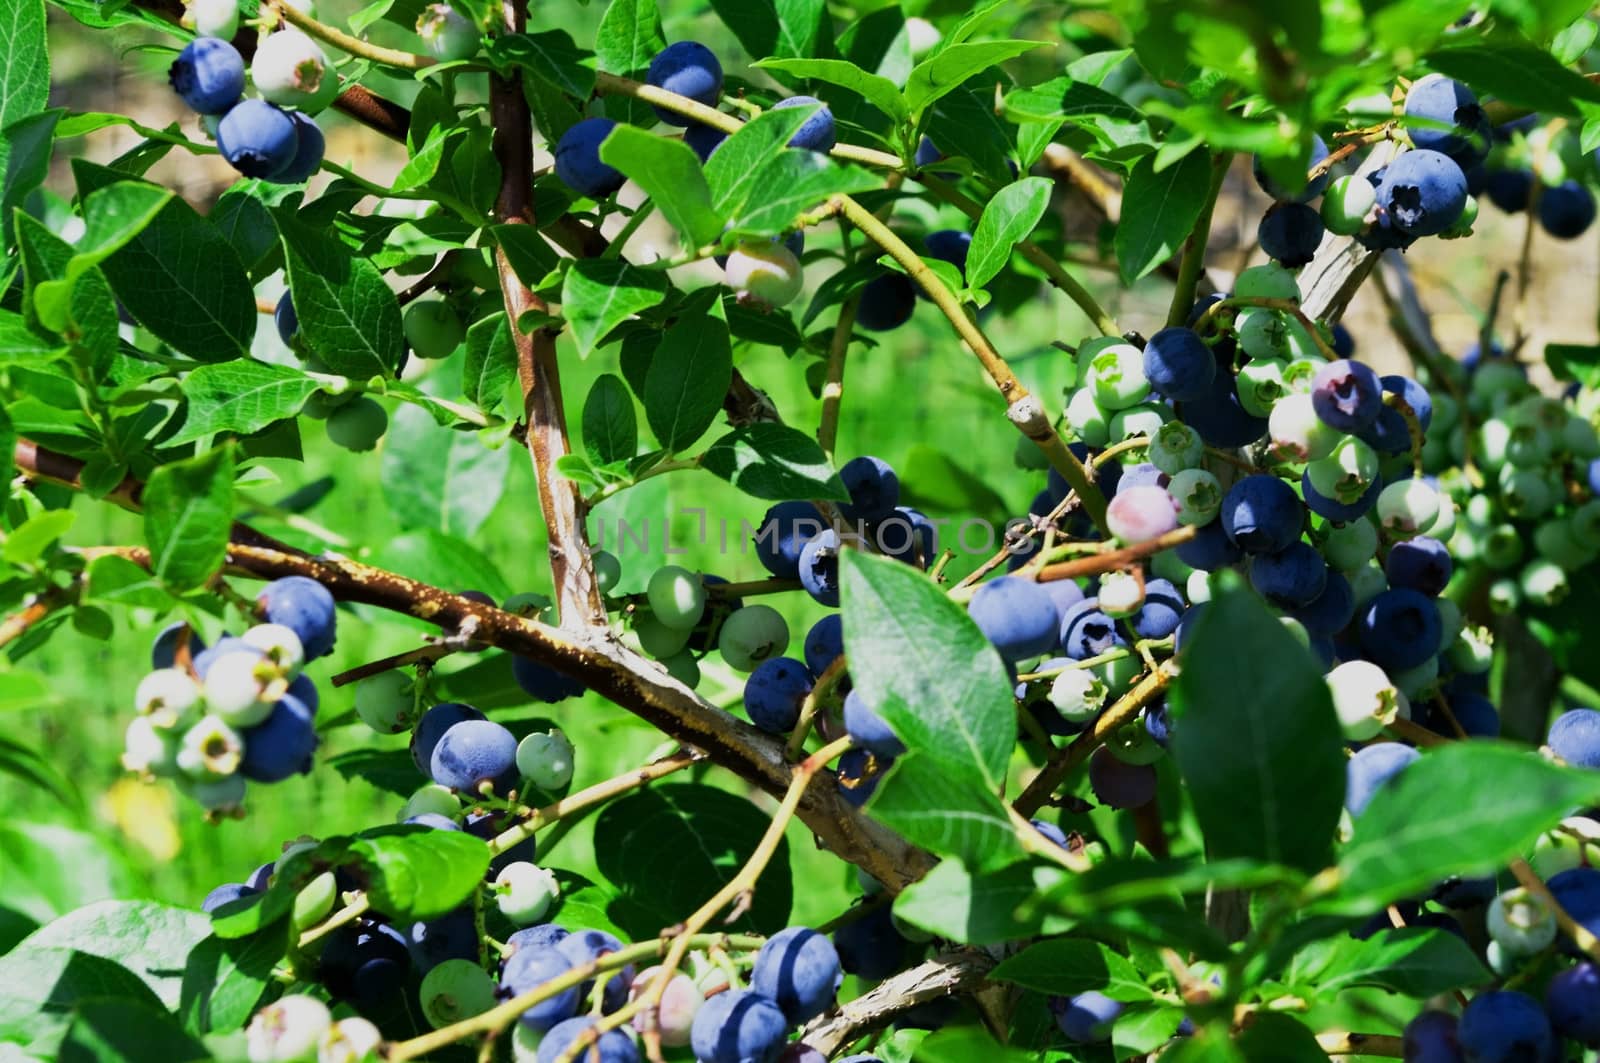 High Bush Blueberries by edcorey